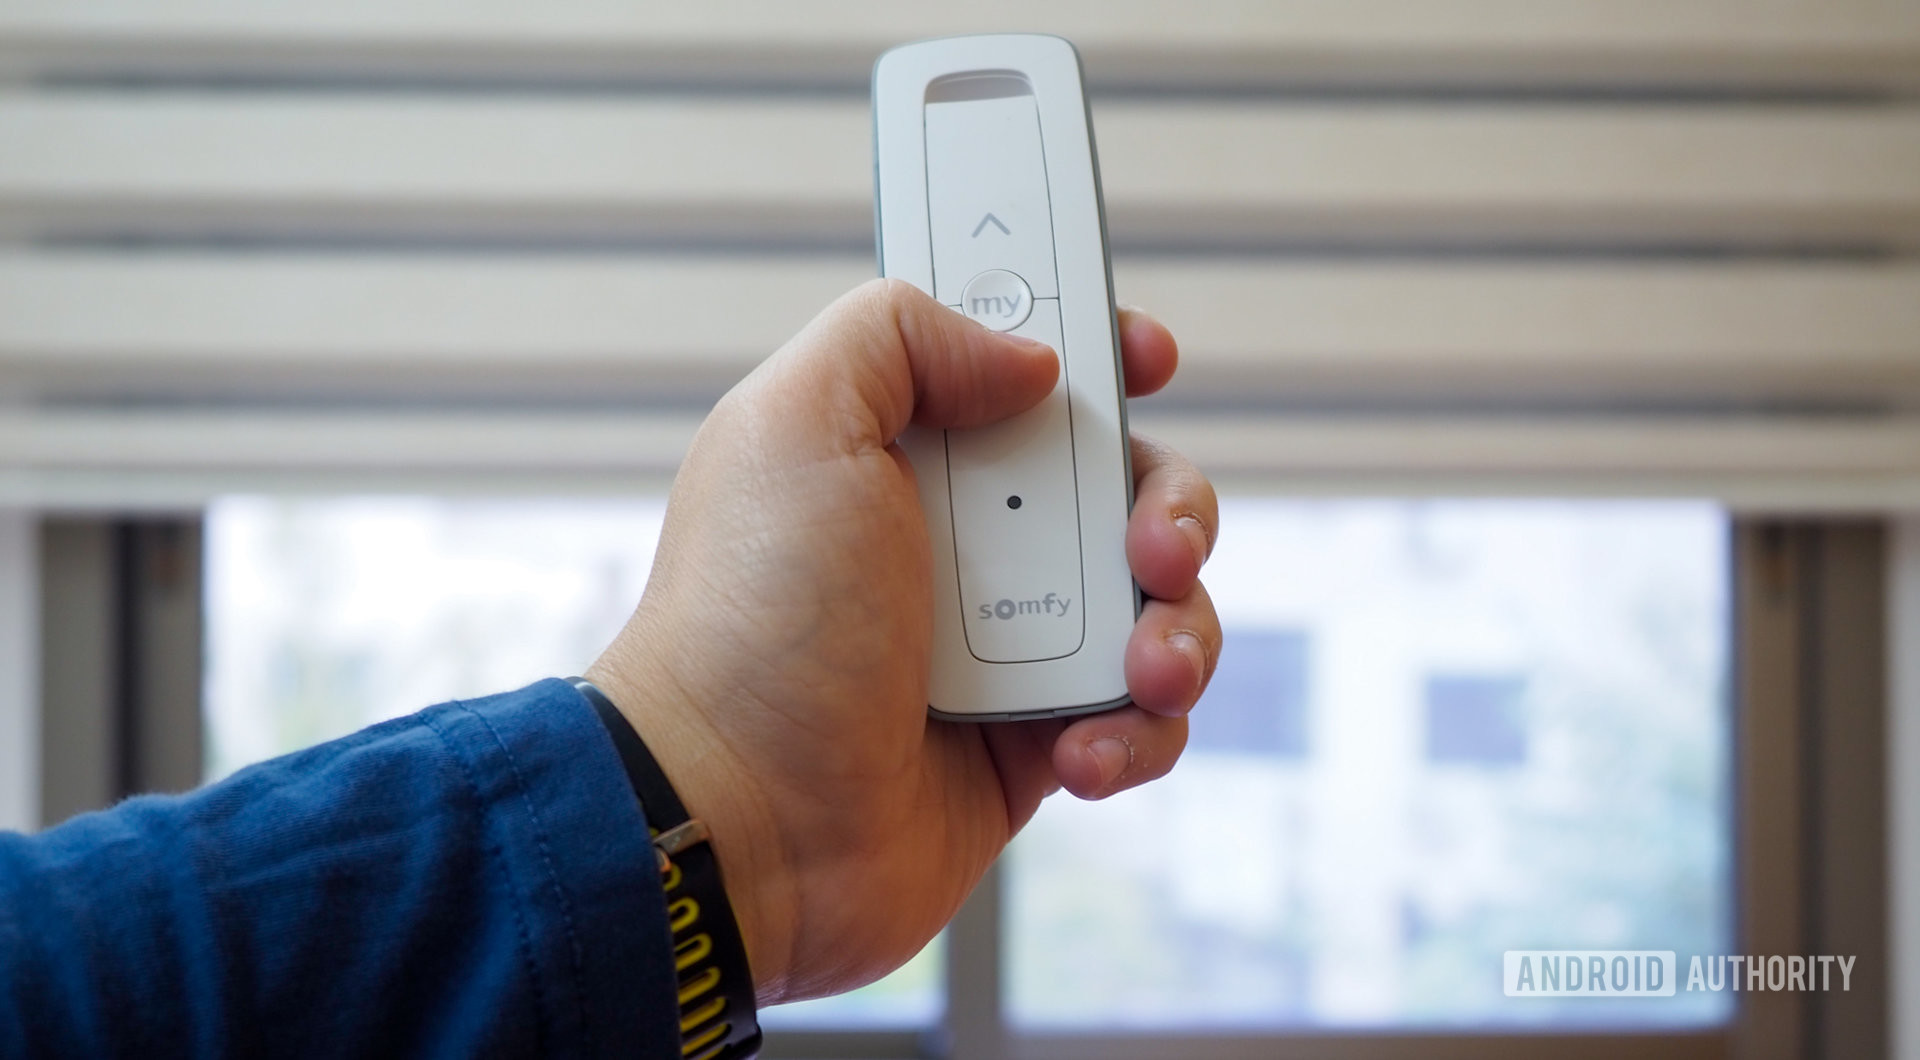 somfy smart blinds manual remote in hand